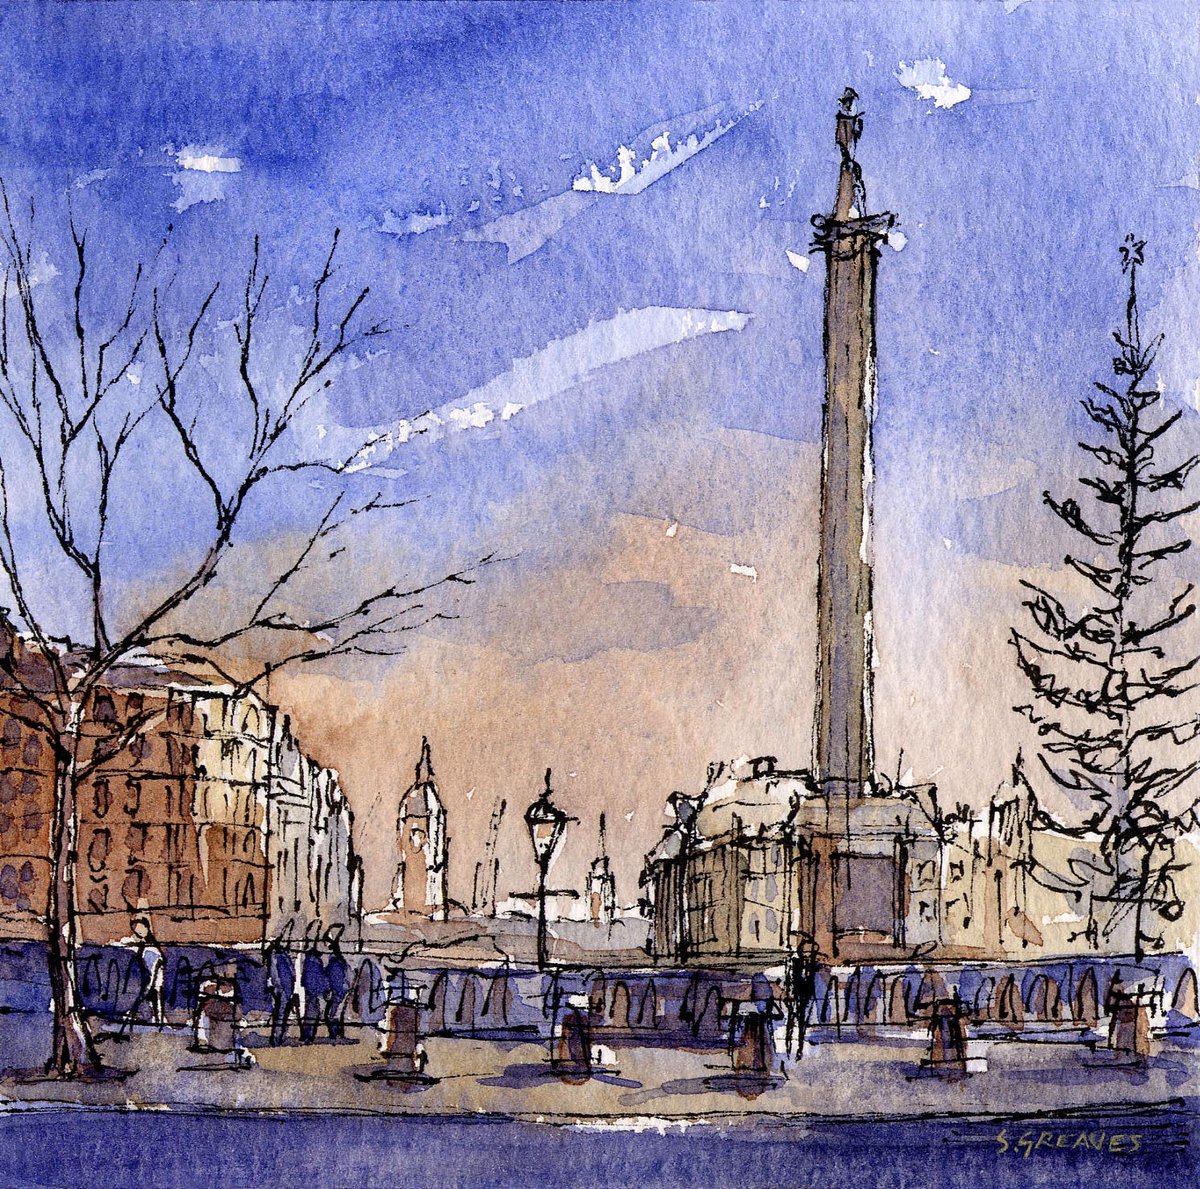 Trafalgar Square, London - Ink & Watercolour 4' x 4' 2001.
#art #ink #watercolor #watercolour #sketch #london #trafalgar #city #england #english #artwork #artist #cityscape #landscape #landmark #drawing #painting #urban #urbanart #nelson #scene #contemporaryart #contemporayartist